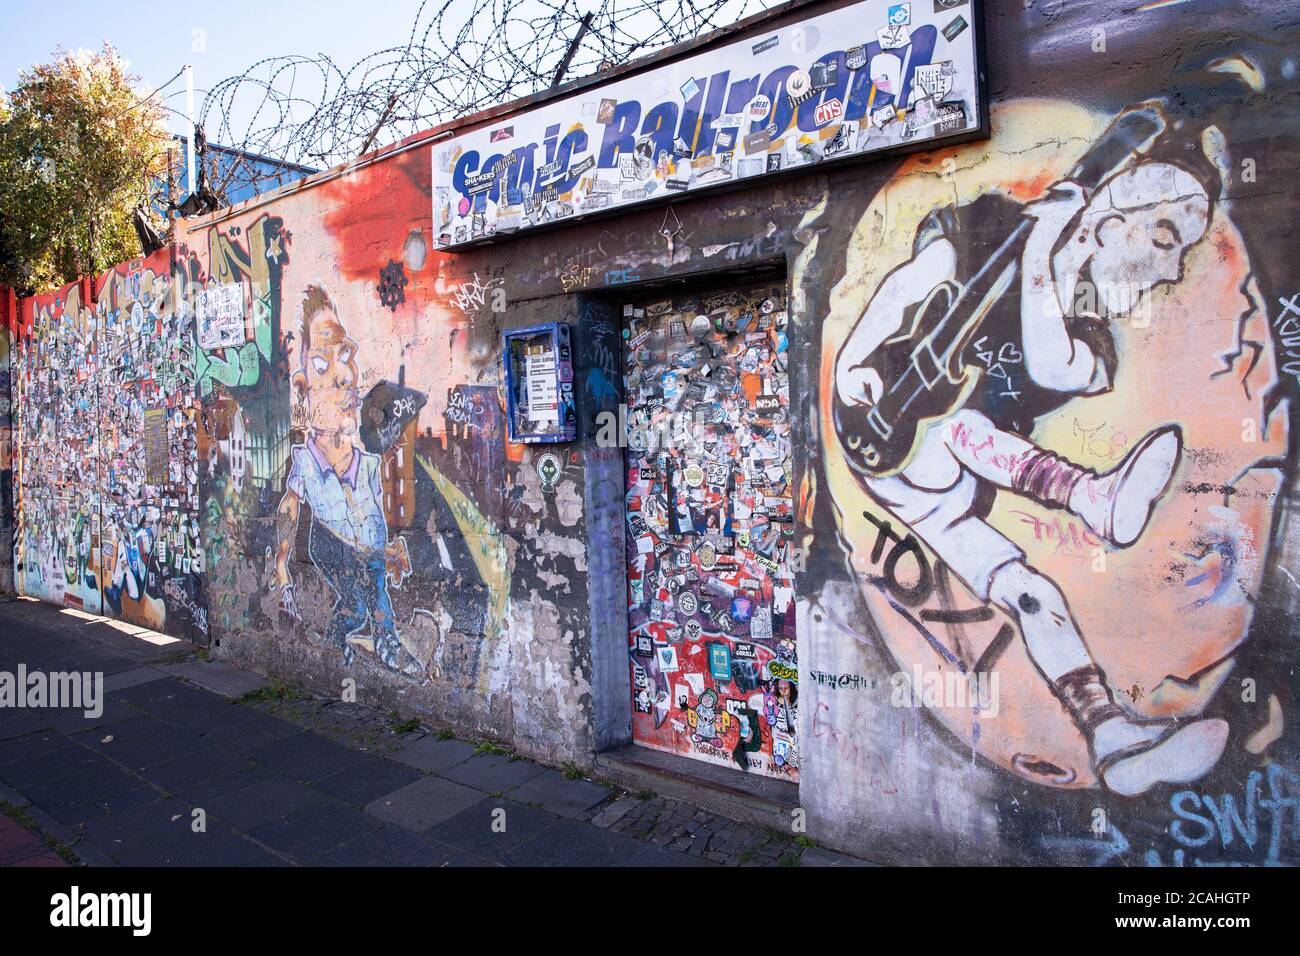 Adesivo sul cancello d'ingresso del Punk-Rock Club Sonic Ballroom nel quartiere Ehrenfeld, Colonia, Germania. Aufkleber auf dem Eingangstor zum Punk Foto Stock